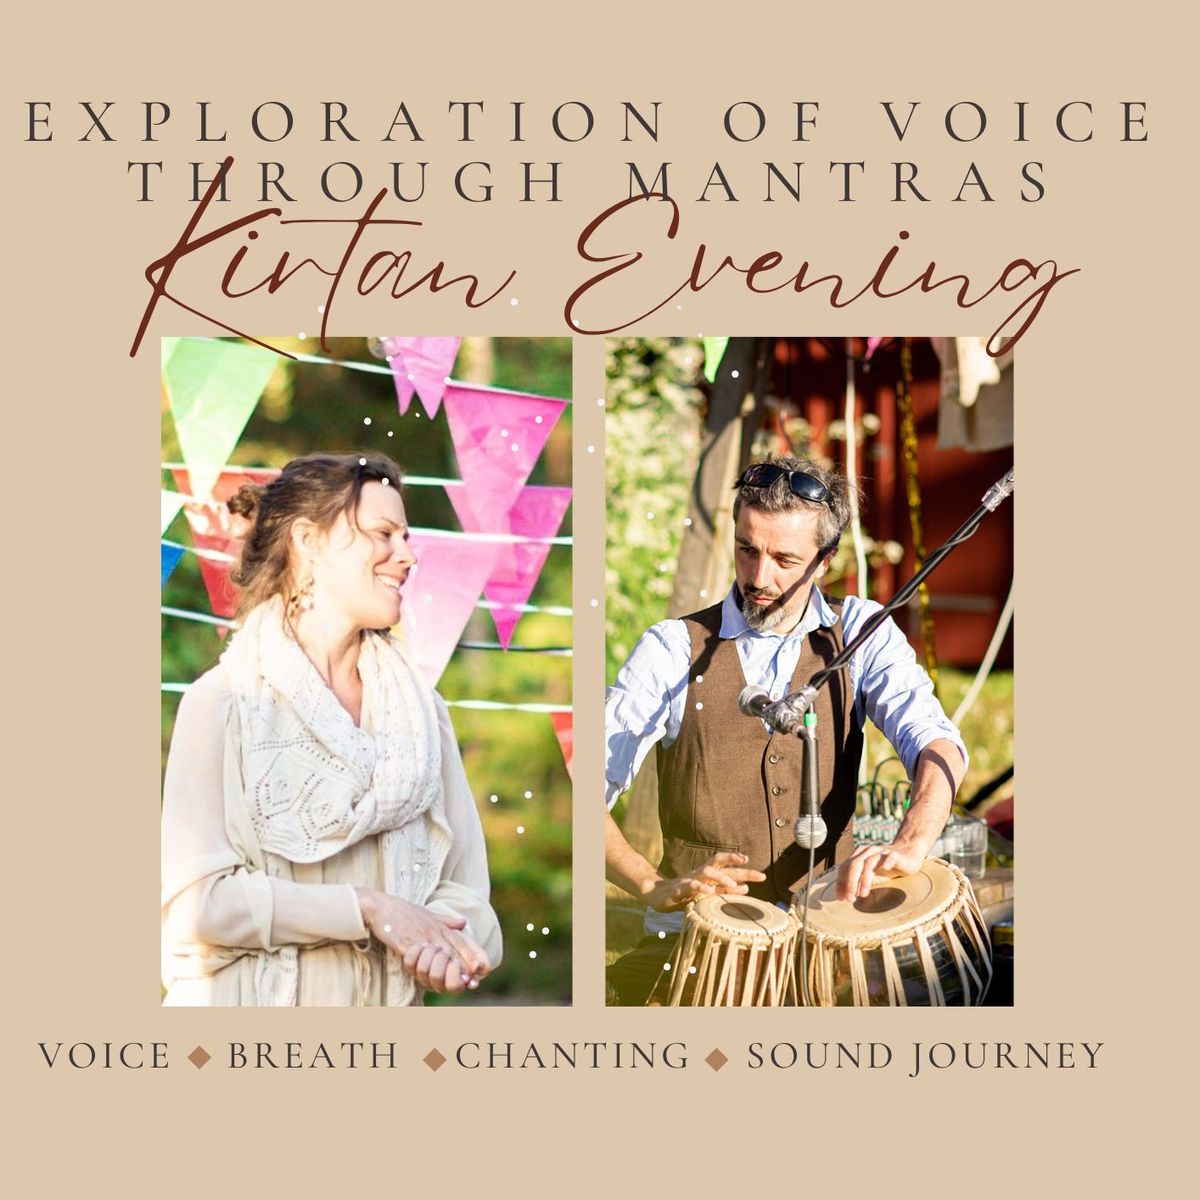 Kirtan Evening - Exploration of voice through mantras